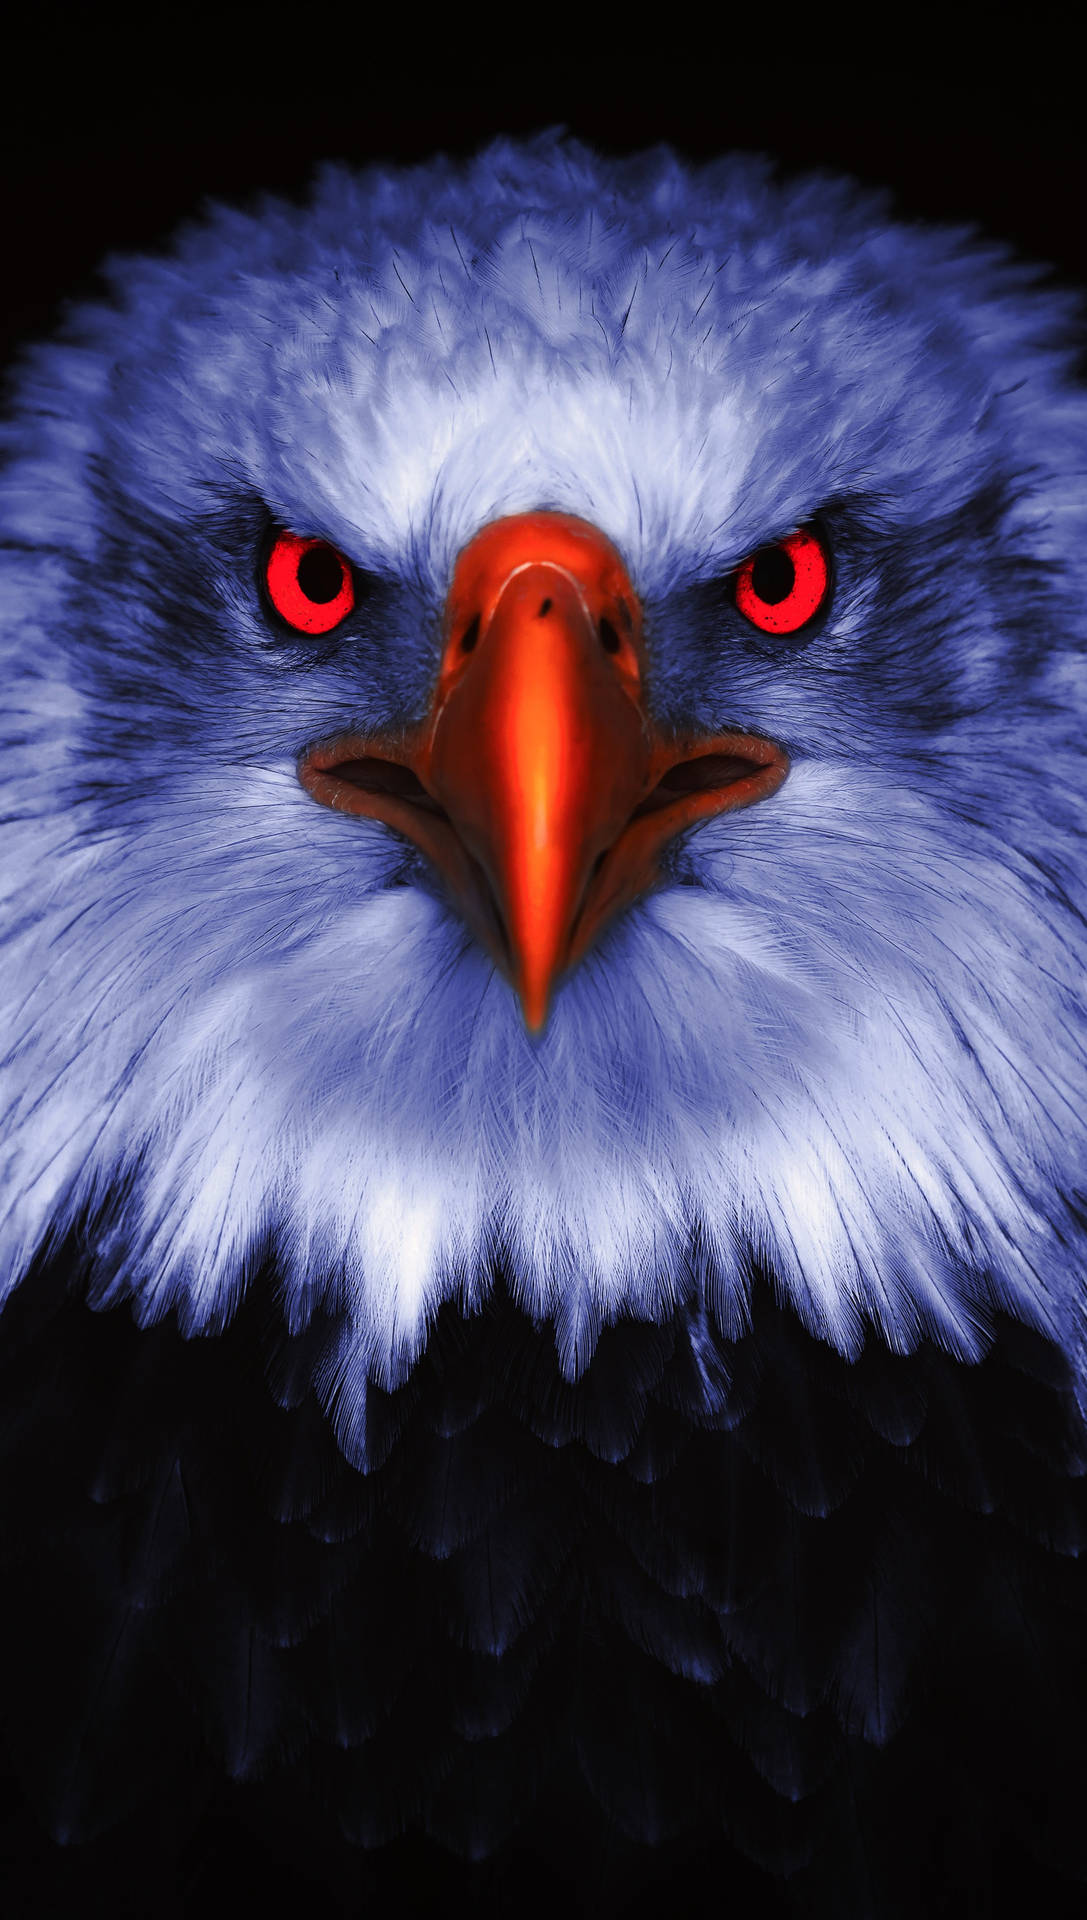 Aguila Bird Vivid Eyes Portrait Wallpaper